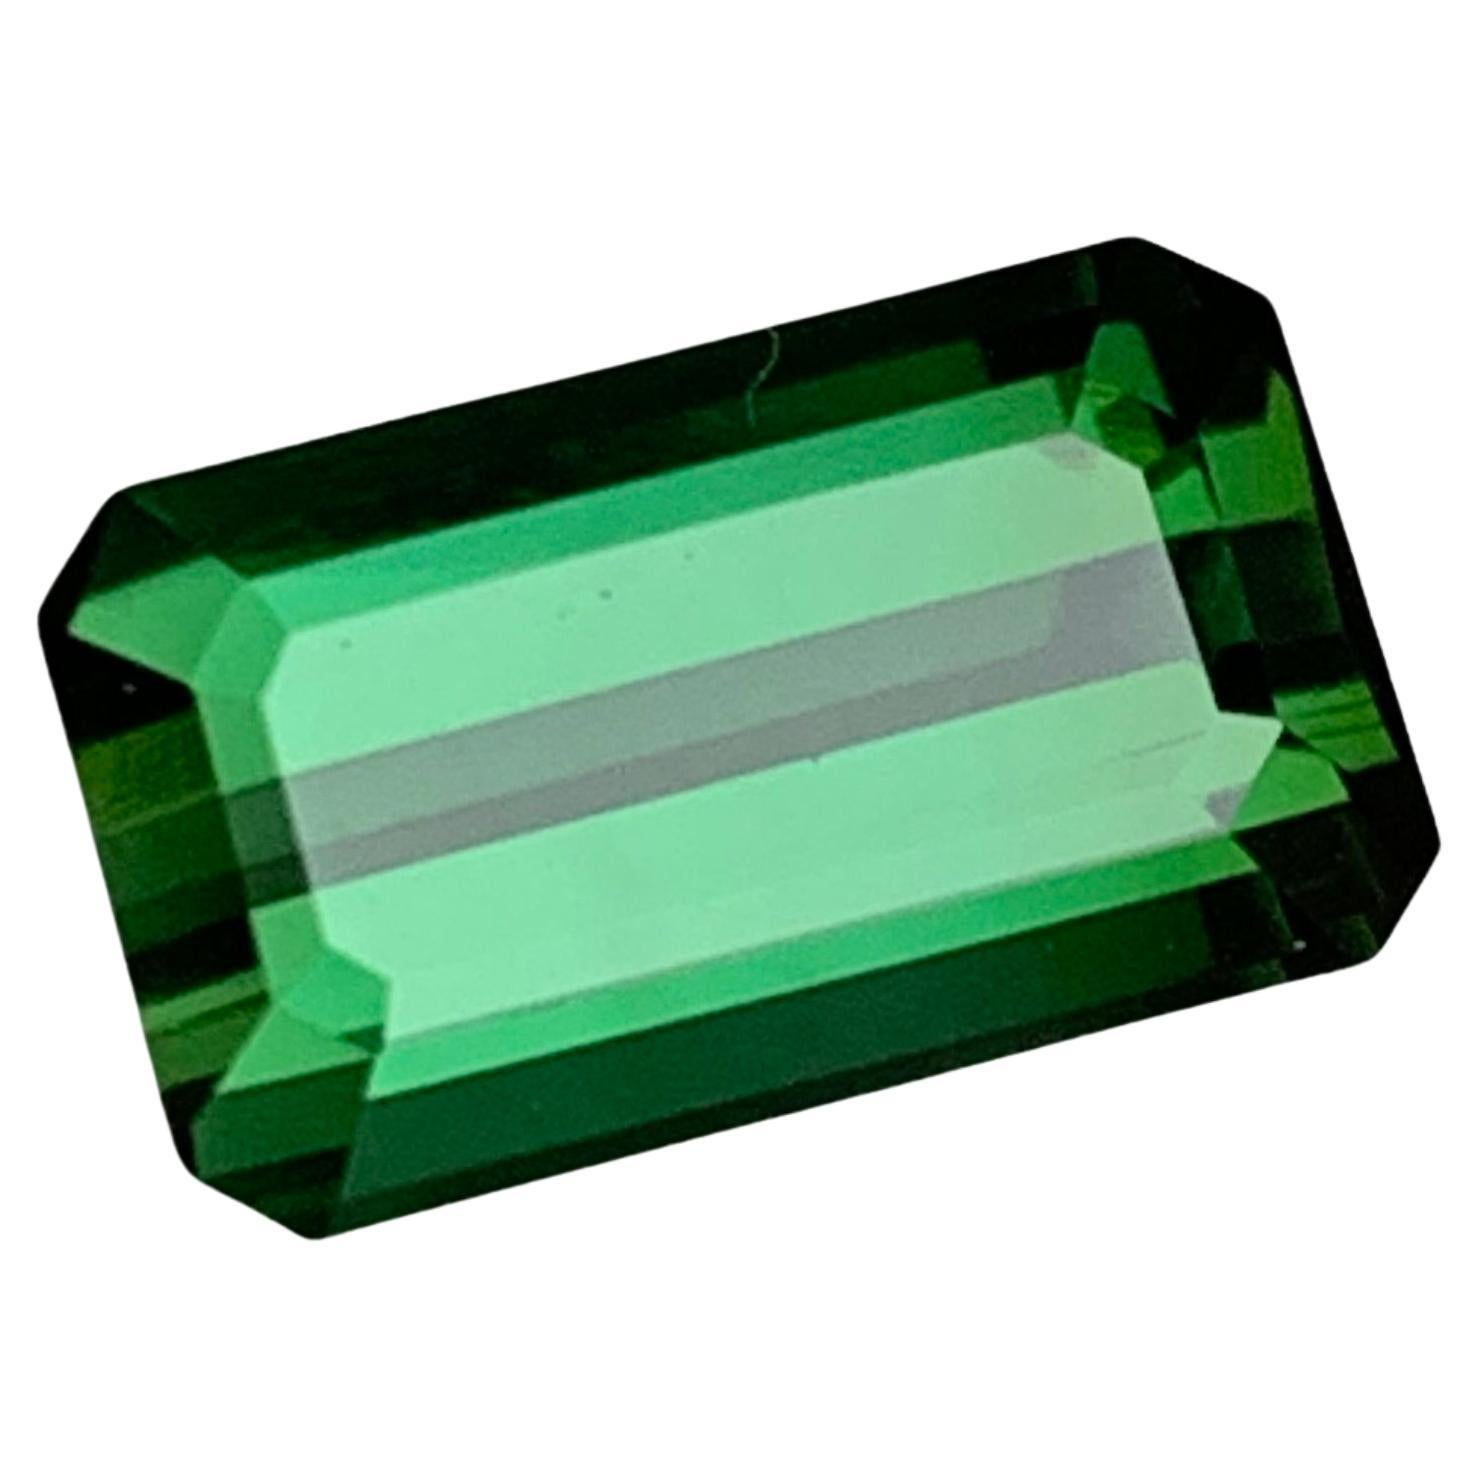 Rare Deep Green Natural Tourmaline Loose Gemstone, 3.75 Ct Emerald Cut for Ring